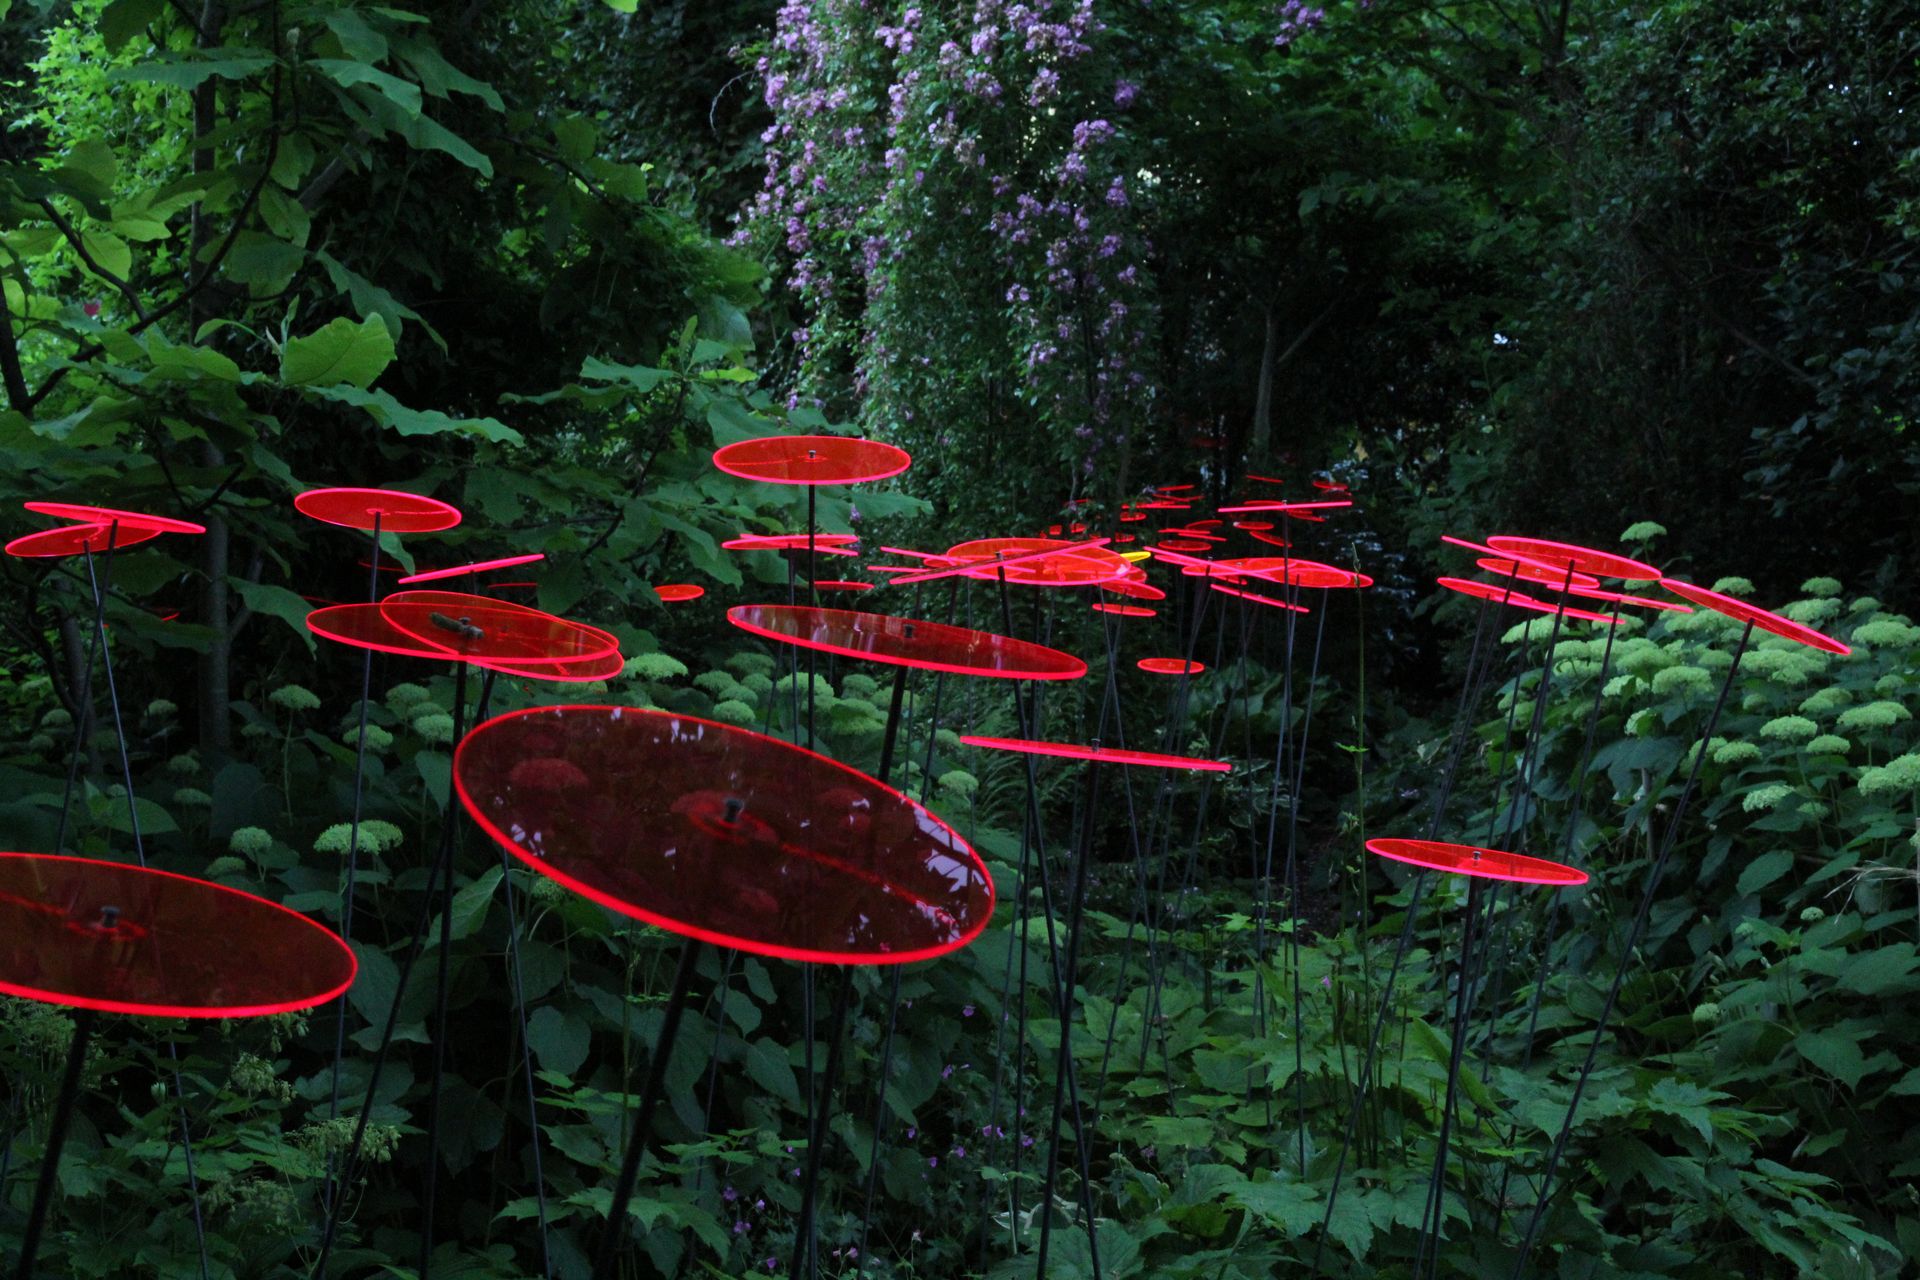 naturepark with red discs